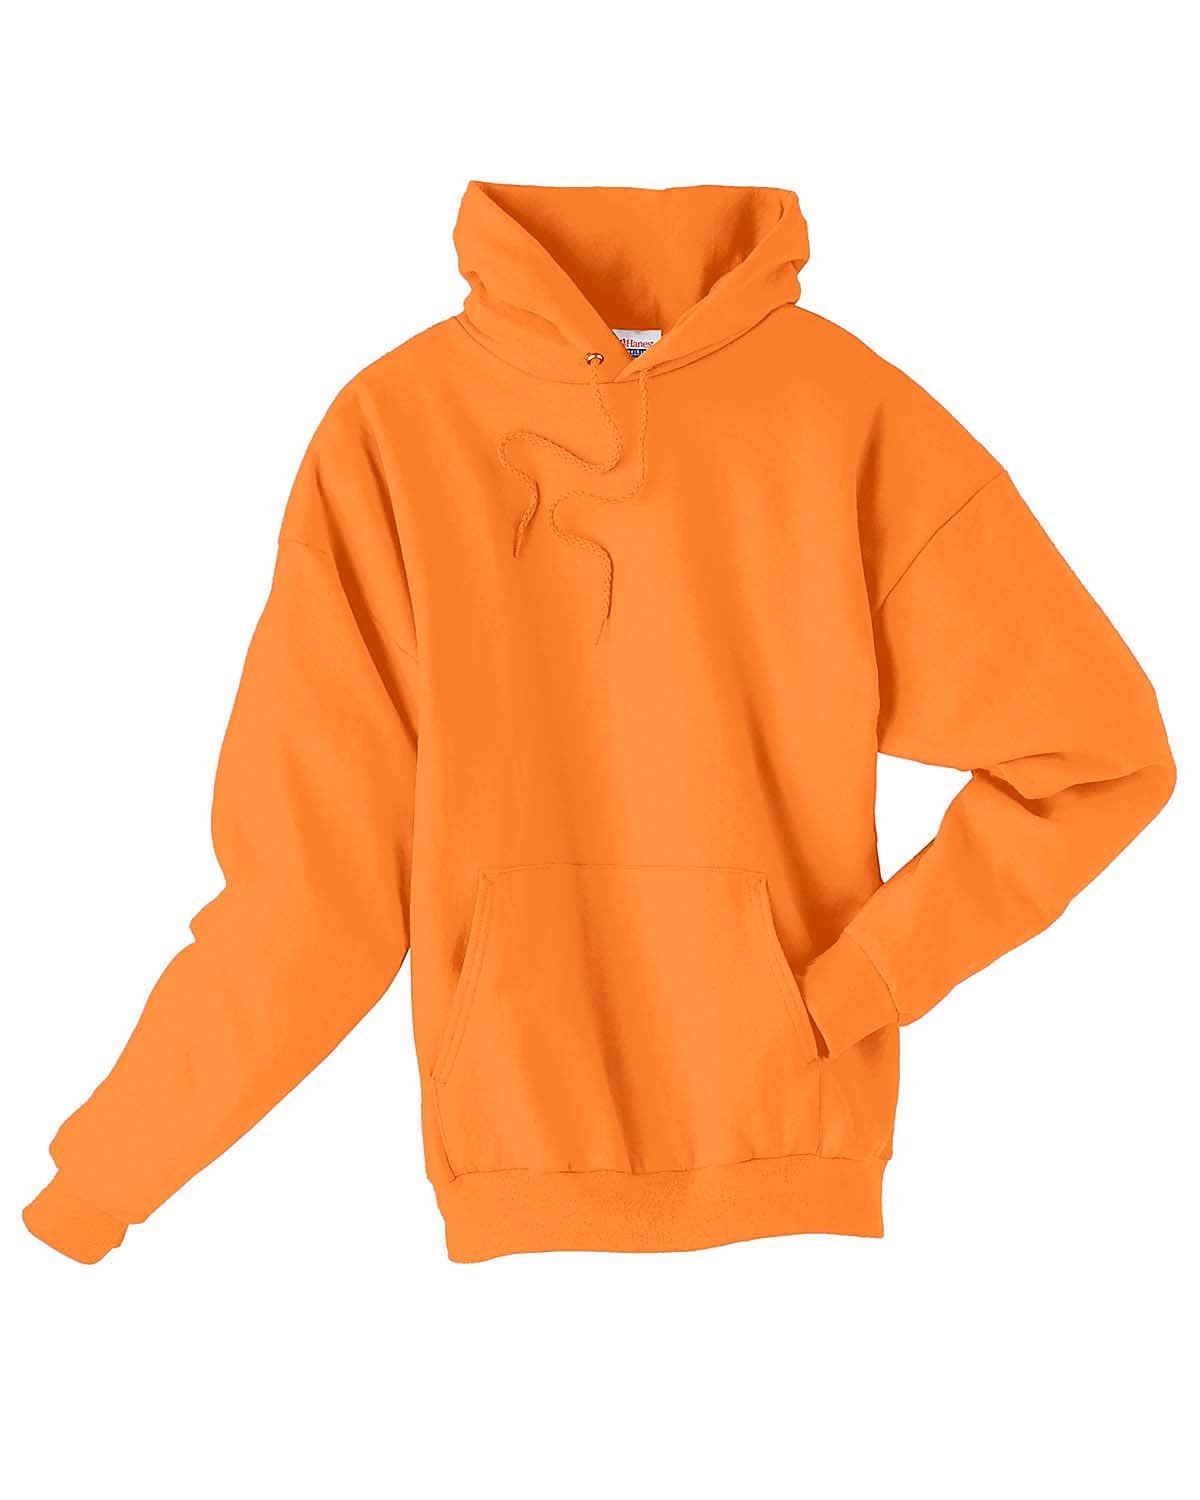 Hanes P170 Unisex Ecosmart 50/50 Pullover Hooded Sweatshirt – Shirts In Bulk